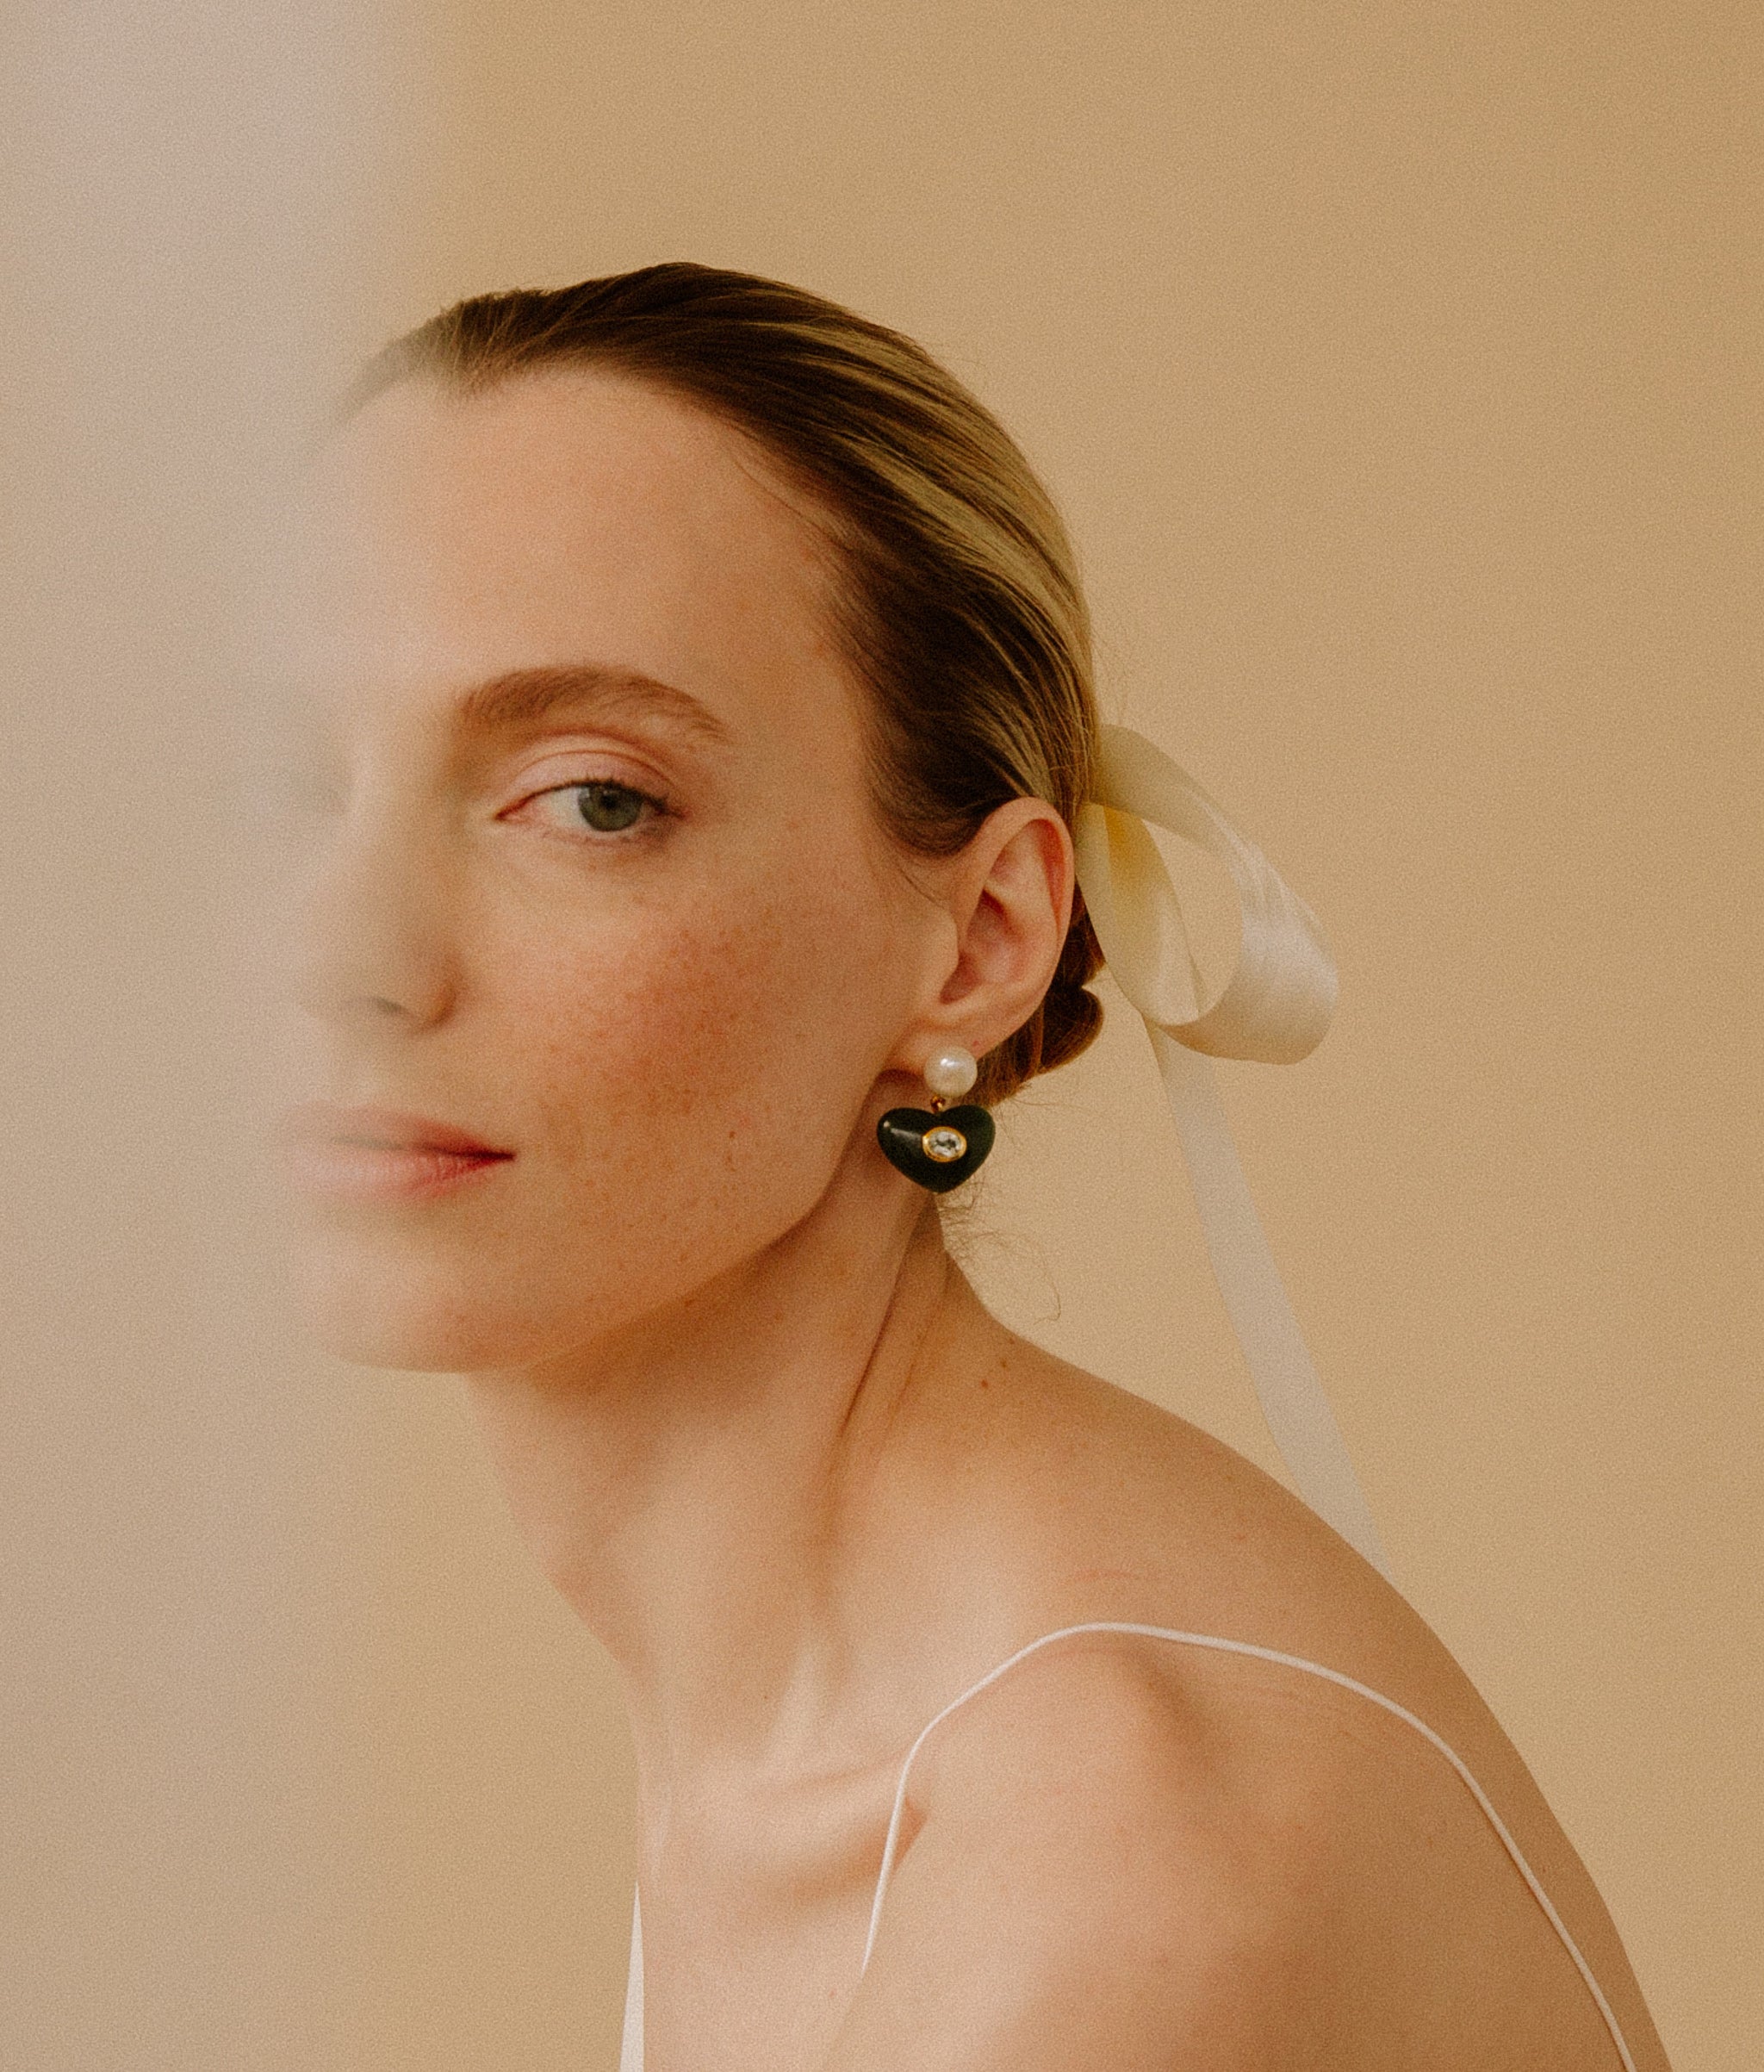 Model wearing the Enamored Earrings in Jade on a tan background.